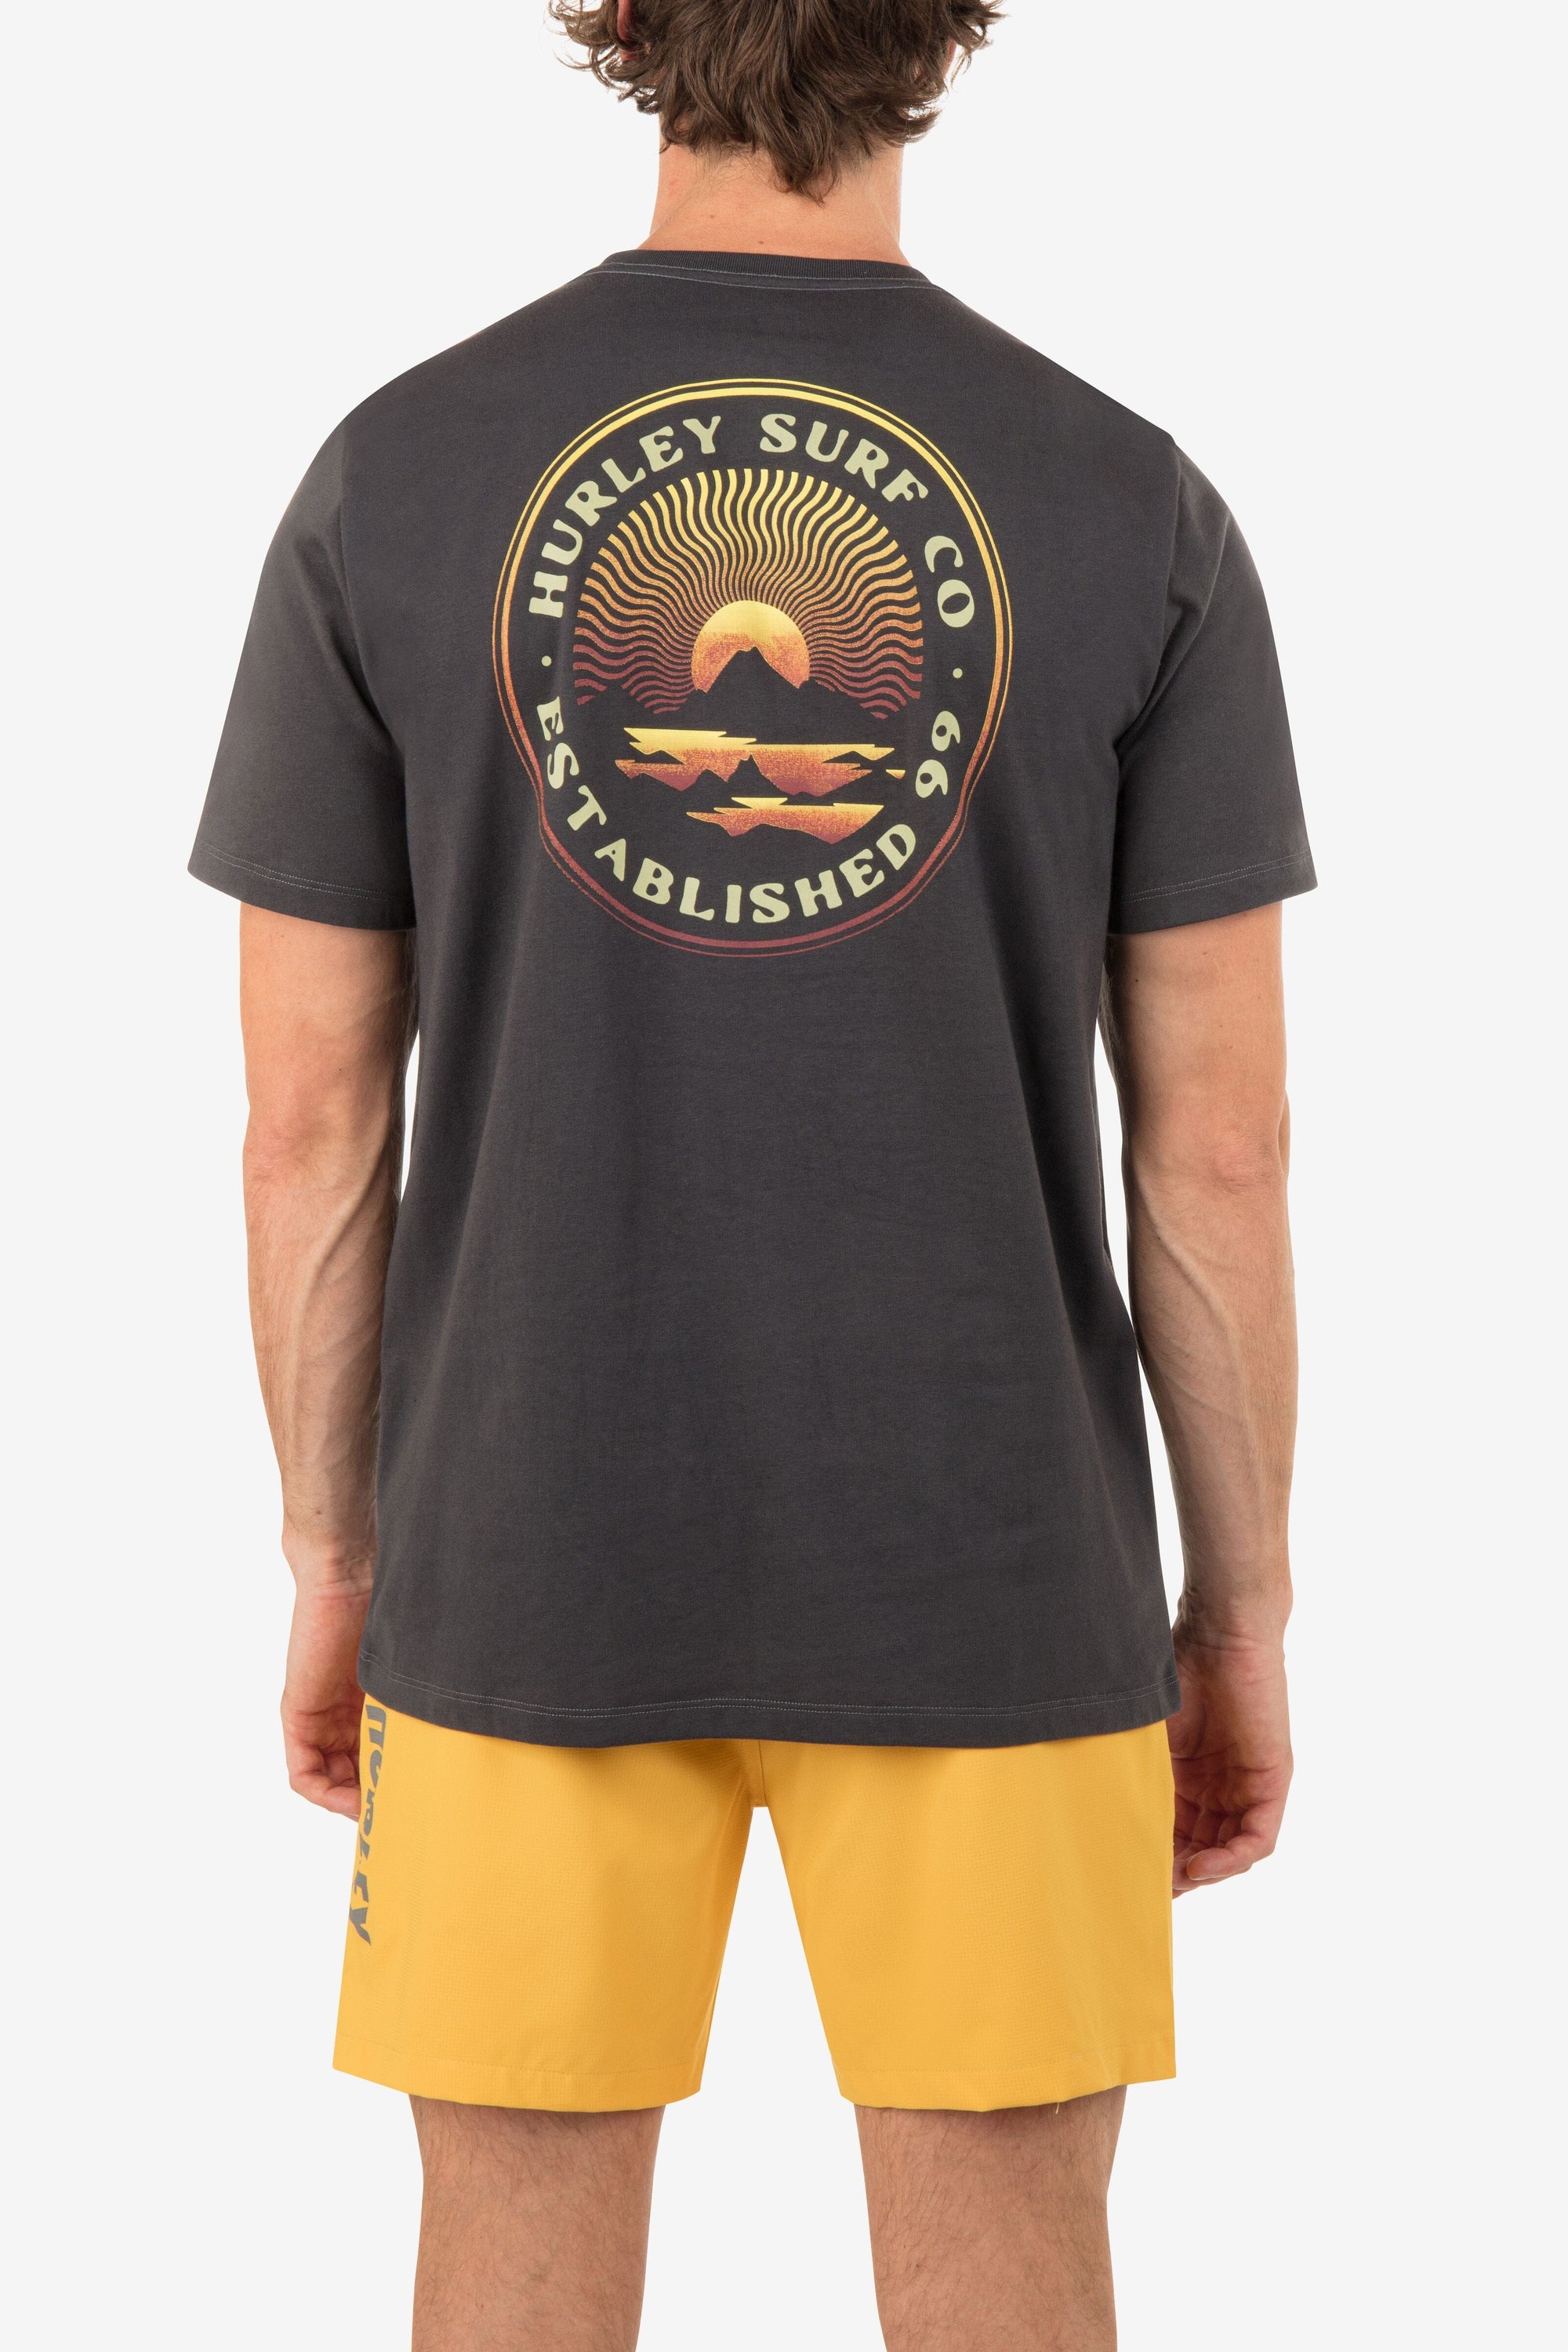 HURLEY Everyday Explore Range T-Shirt Dark Stone Grey Men's Short Sleeve T-Shirts Hurley 